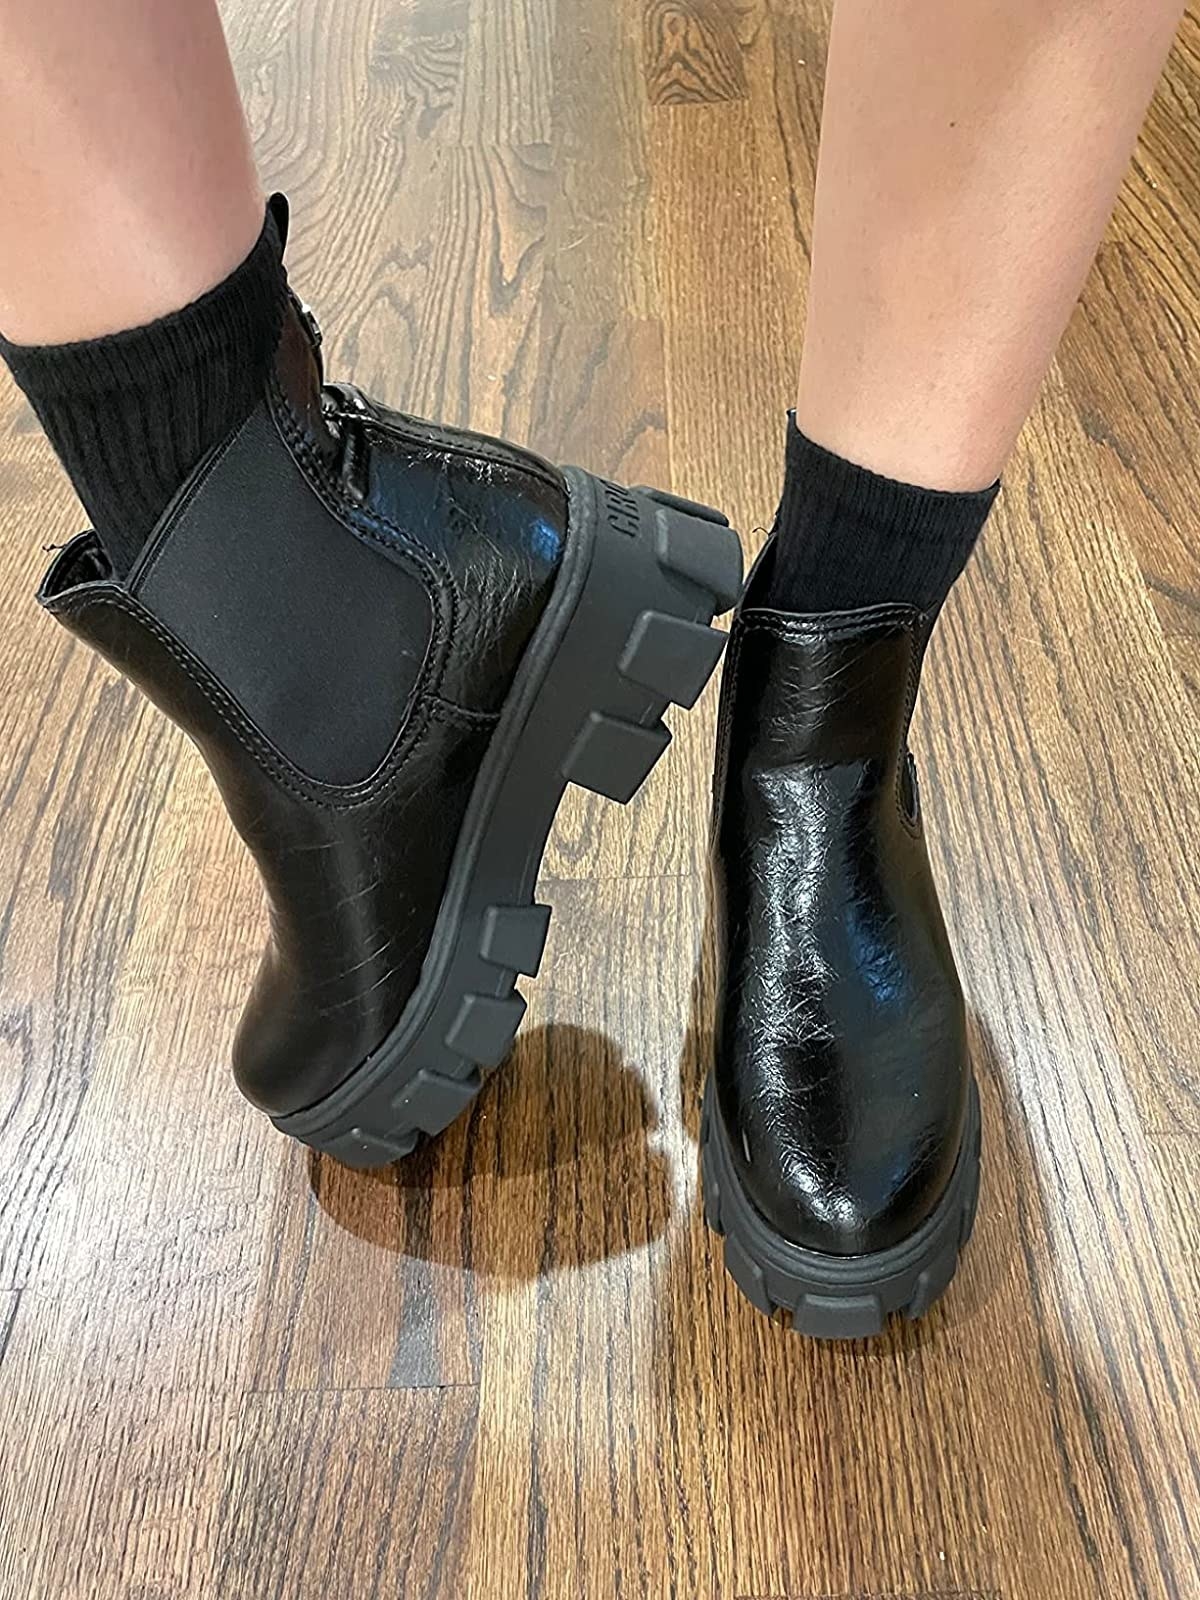 Reviewer wearing black platform boots